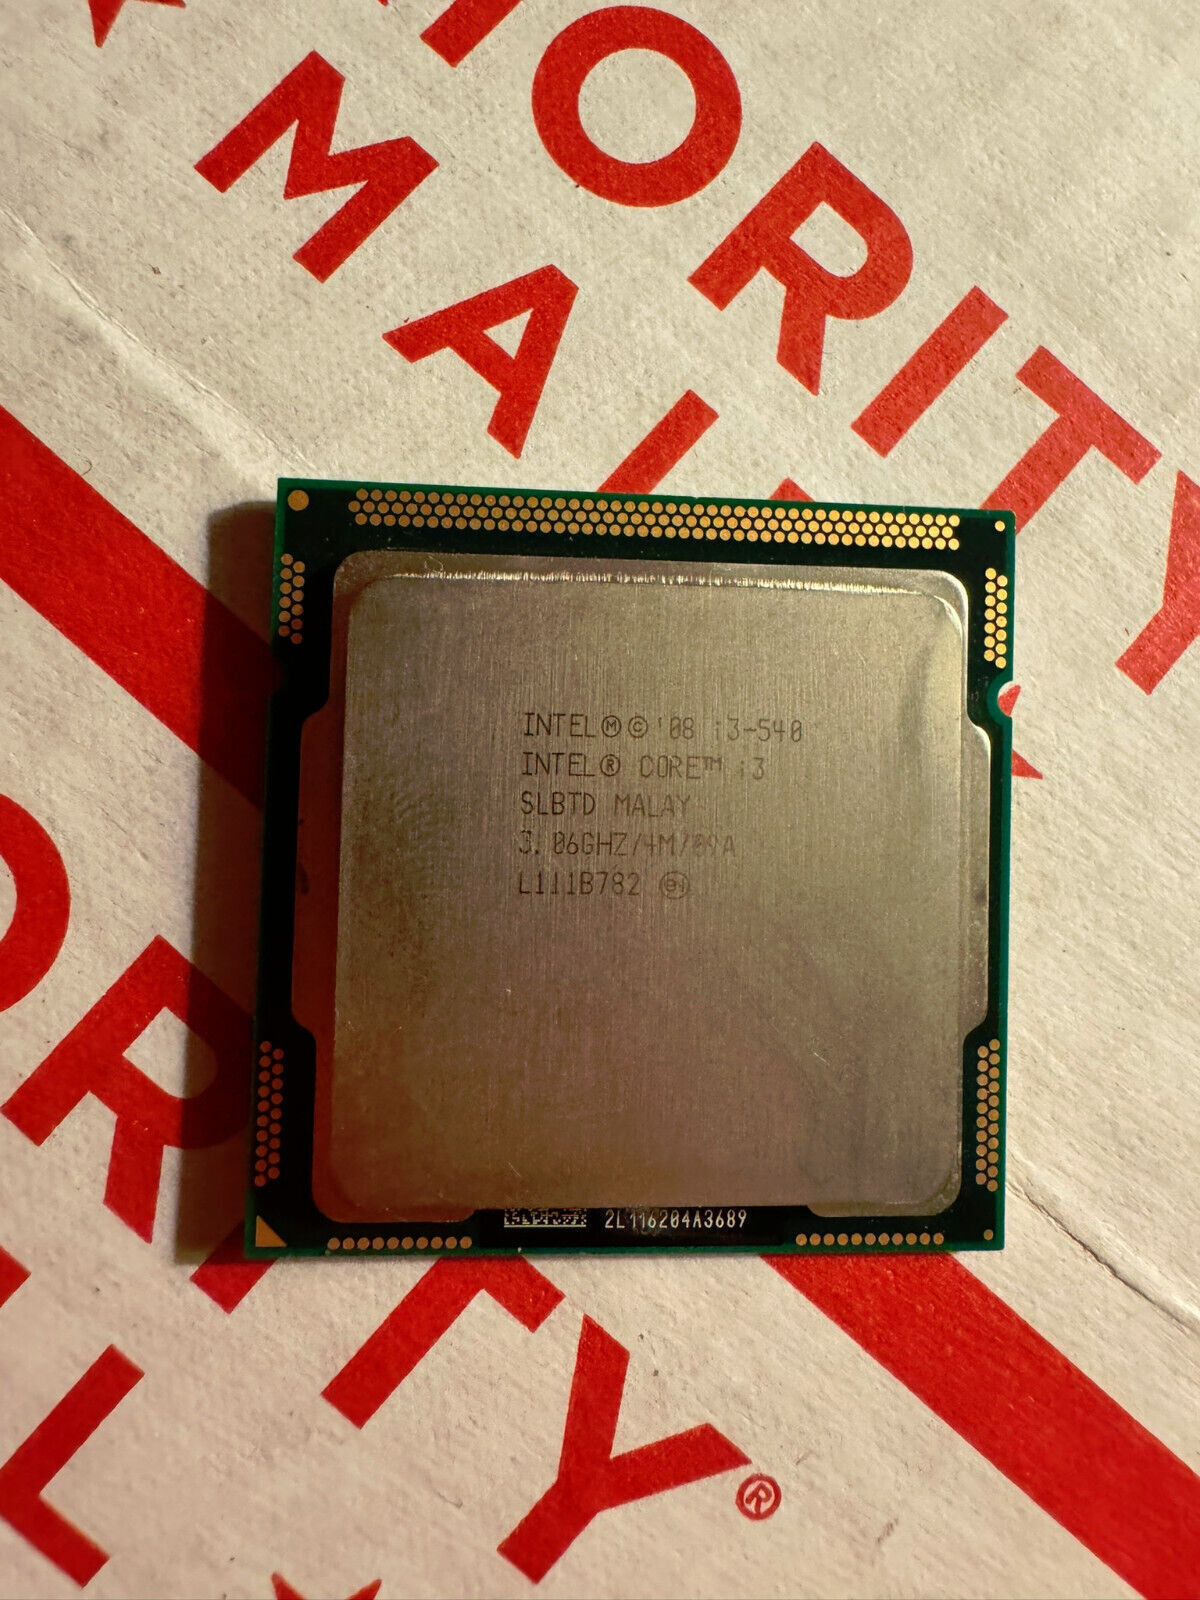 Intel Core i3-540 SLBTD 3.06GHZ/4M/09A  Socket 1156 / H1 / LGA1156 CPU ???